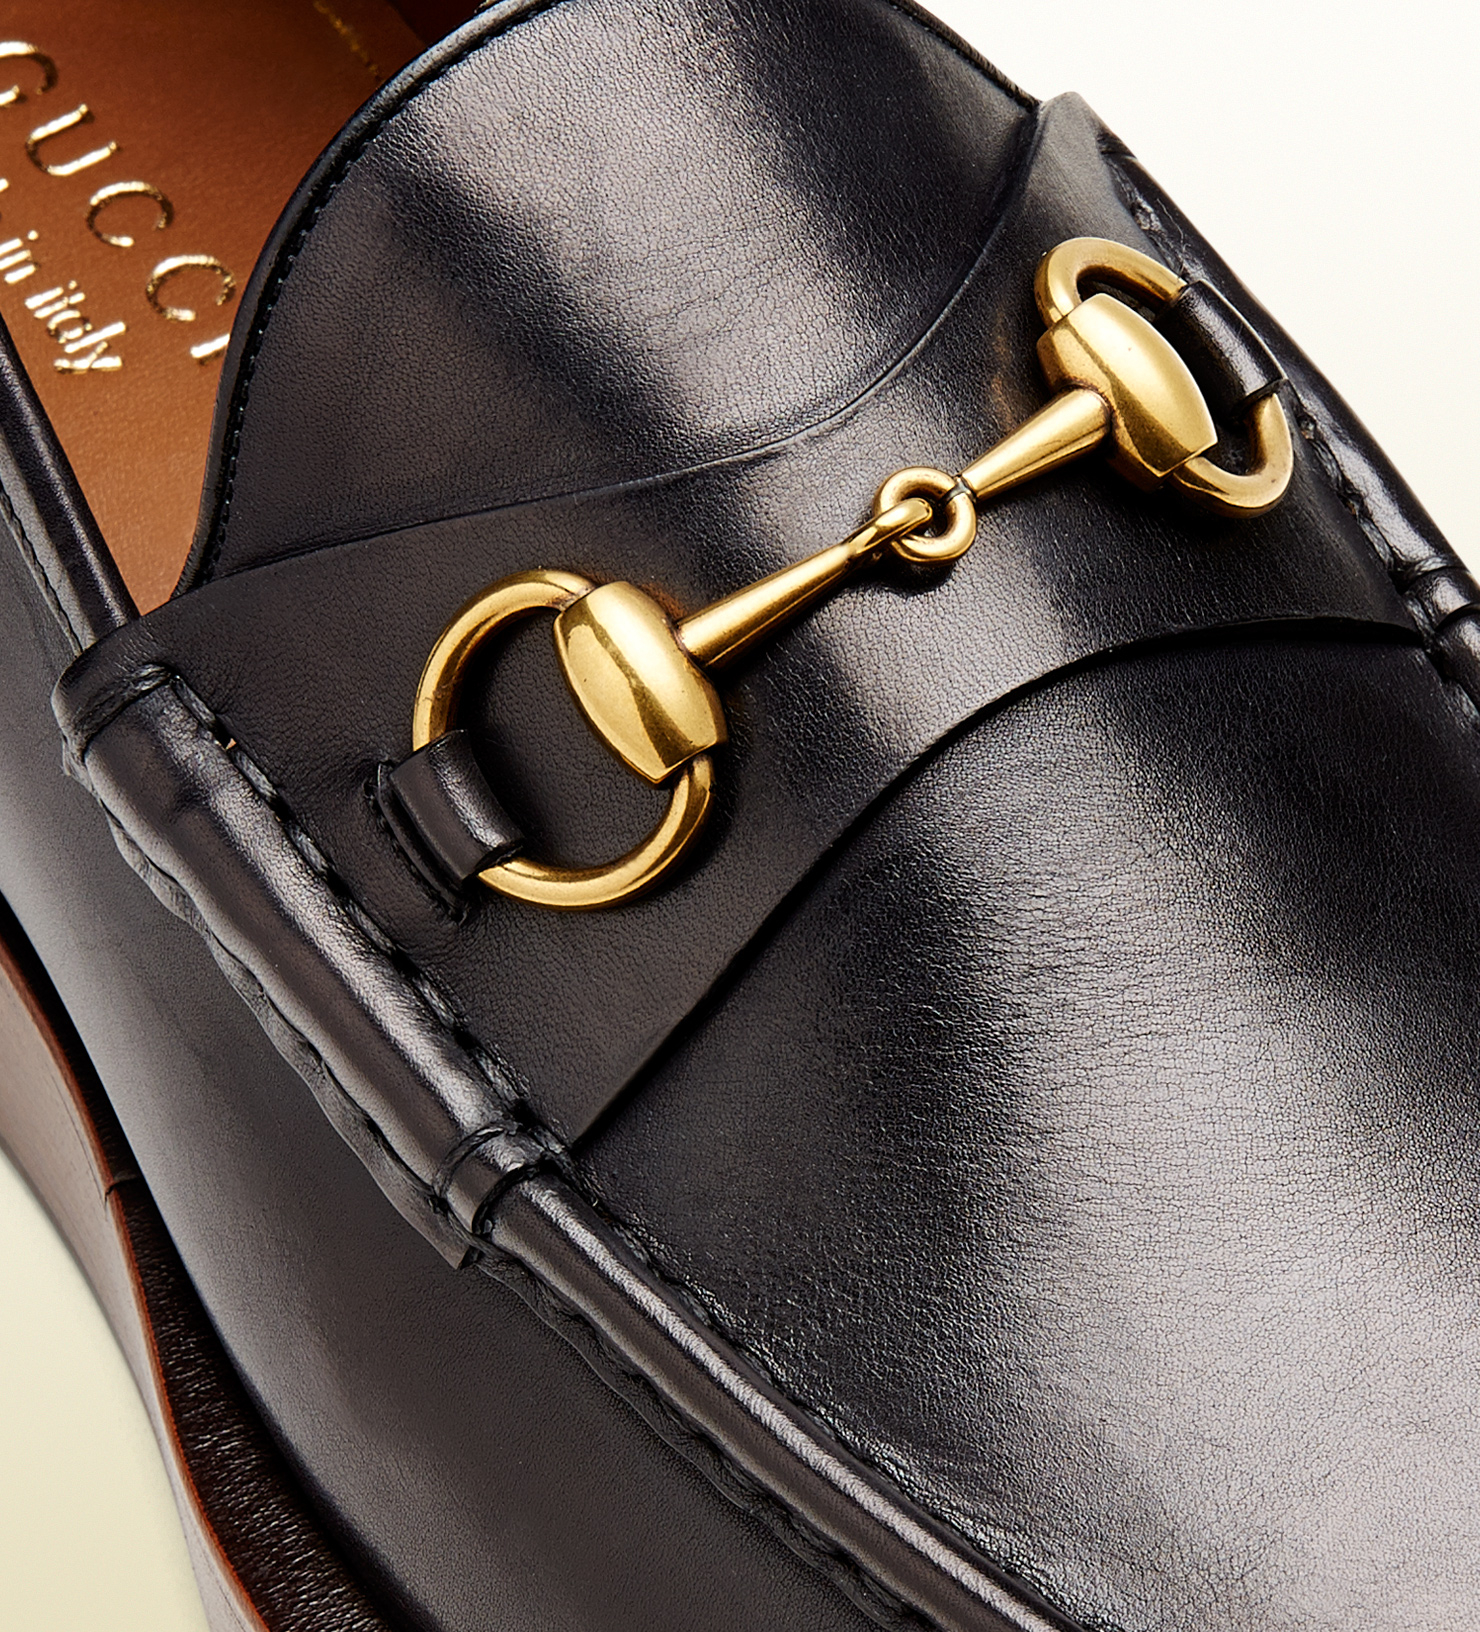 Gucci Shaded Leather Platform Horsebit Loafer in Black for Men - Lyst